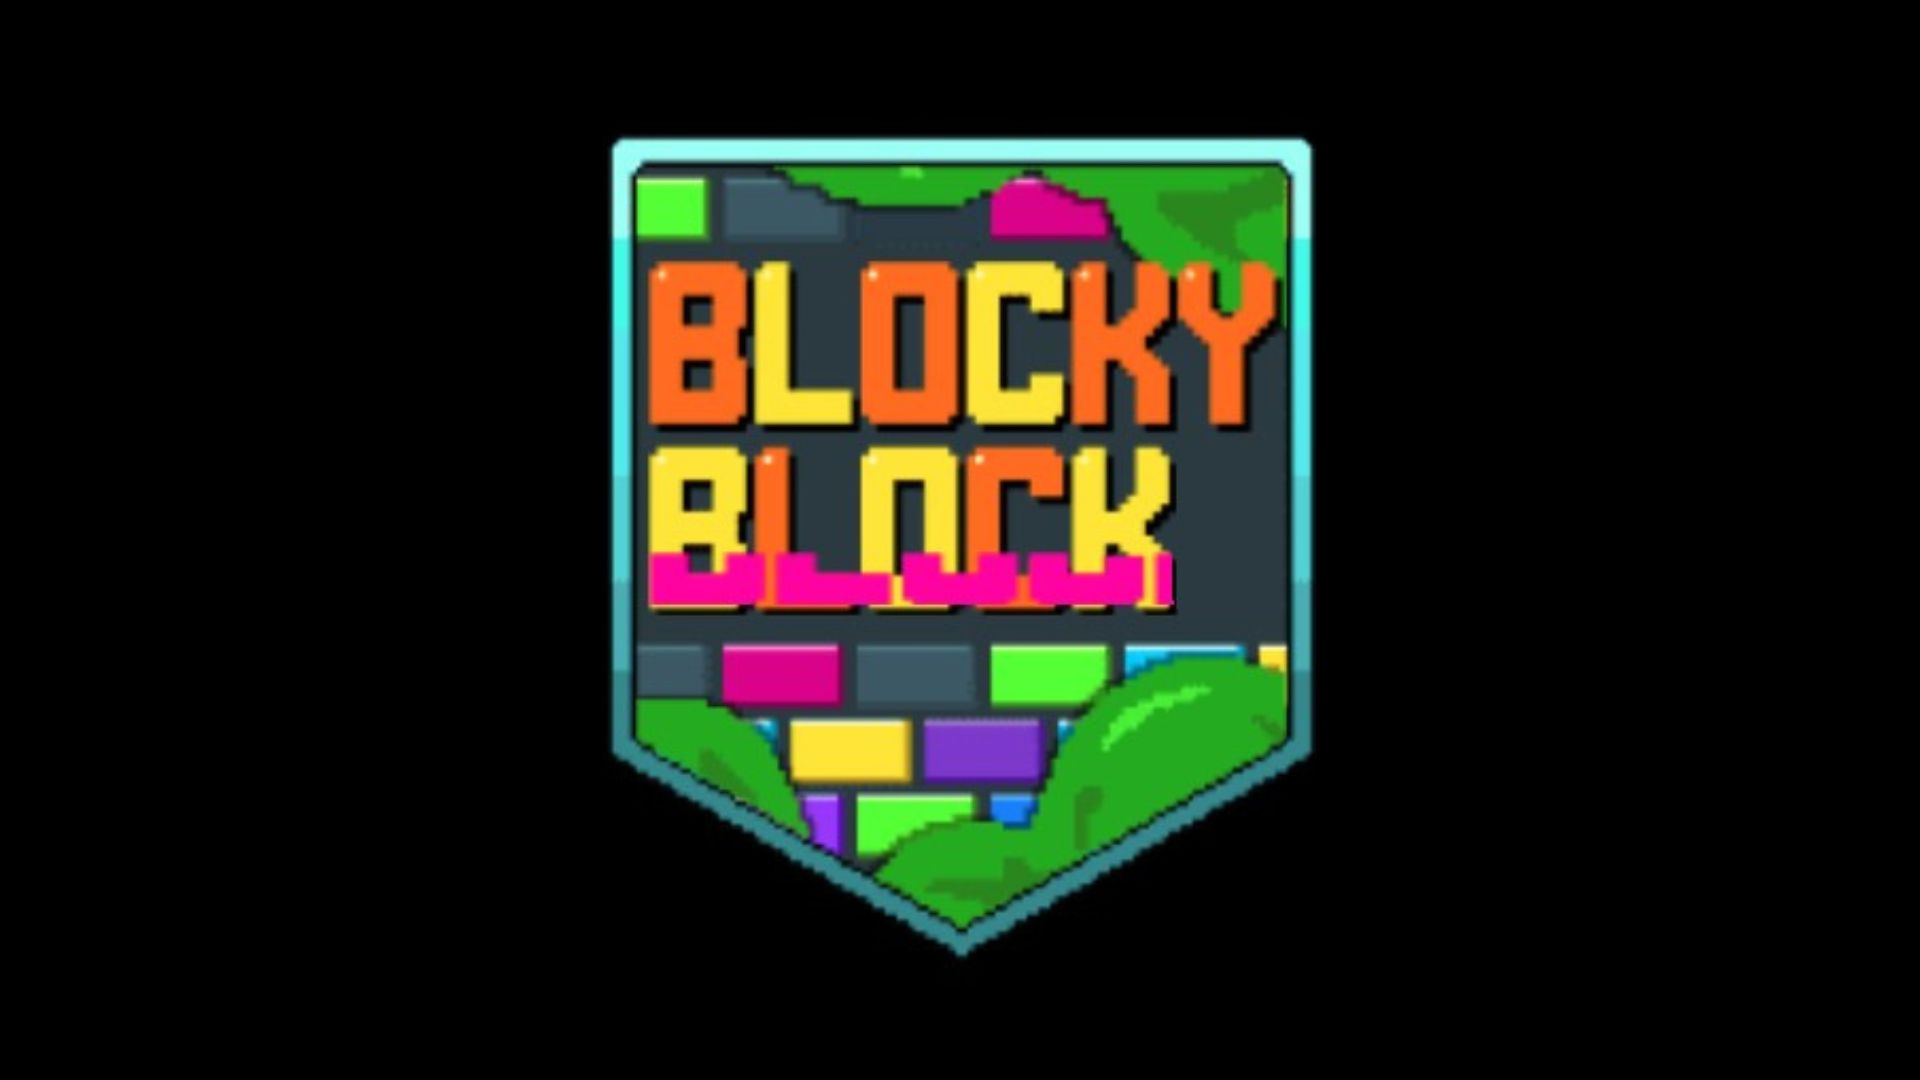 game slot online blocky block